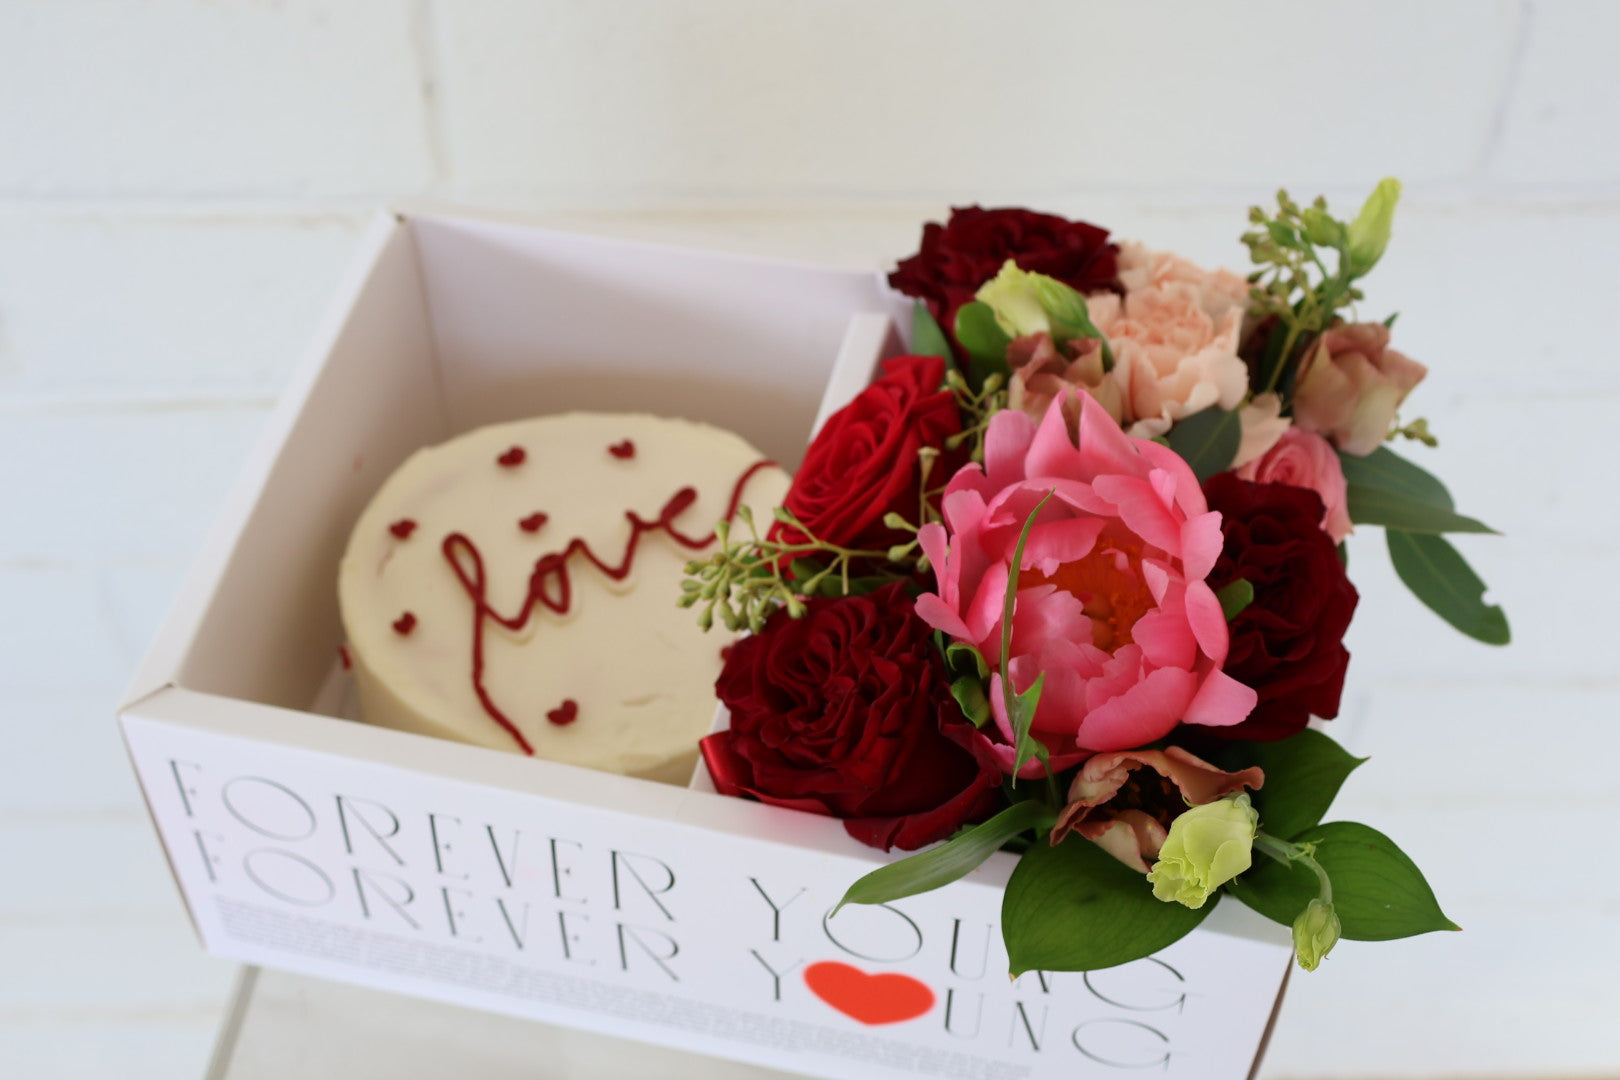 Sweetheart delight - A Lari Bakery x NovaPetal Limited Edition set